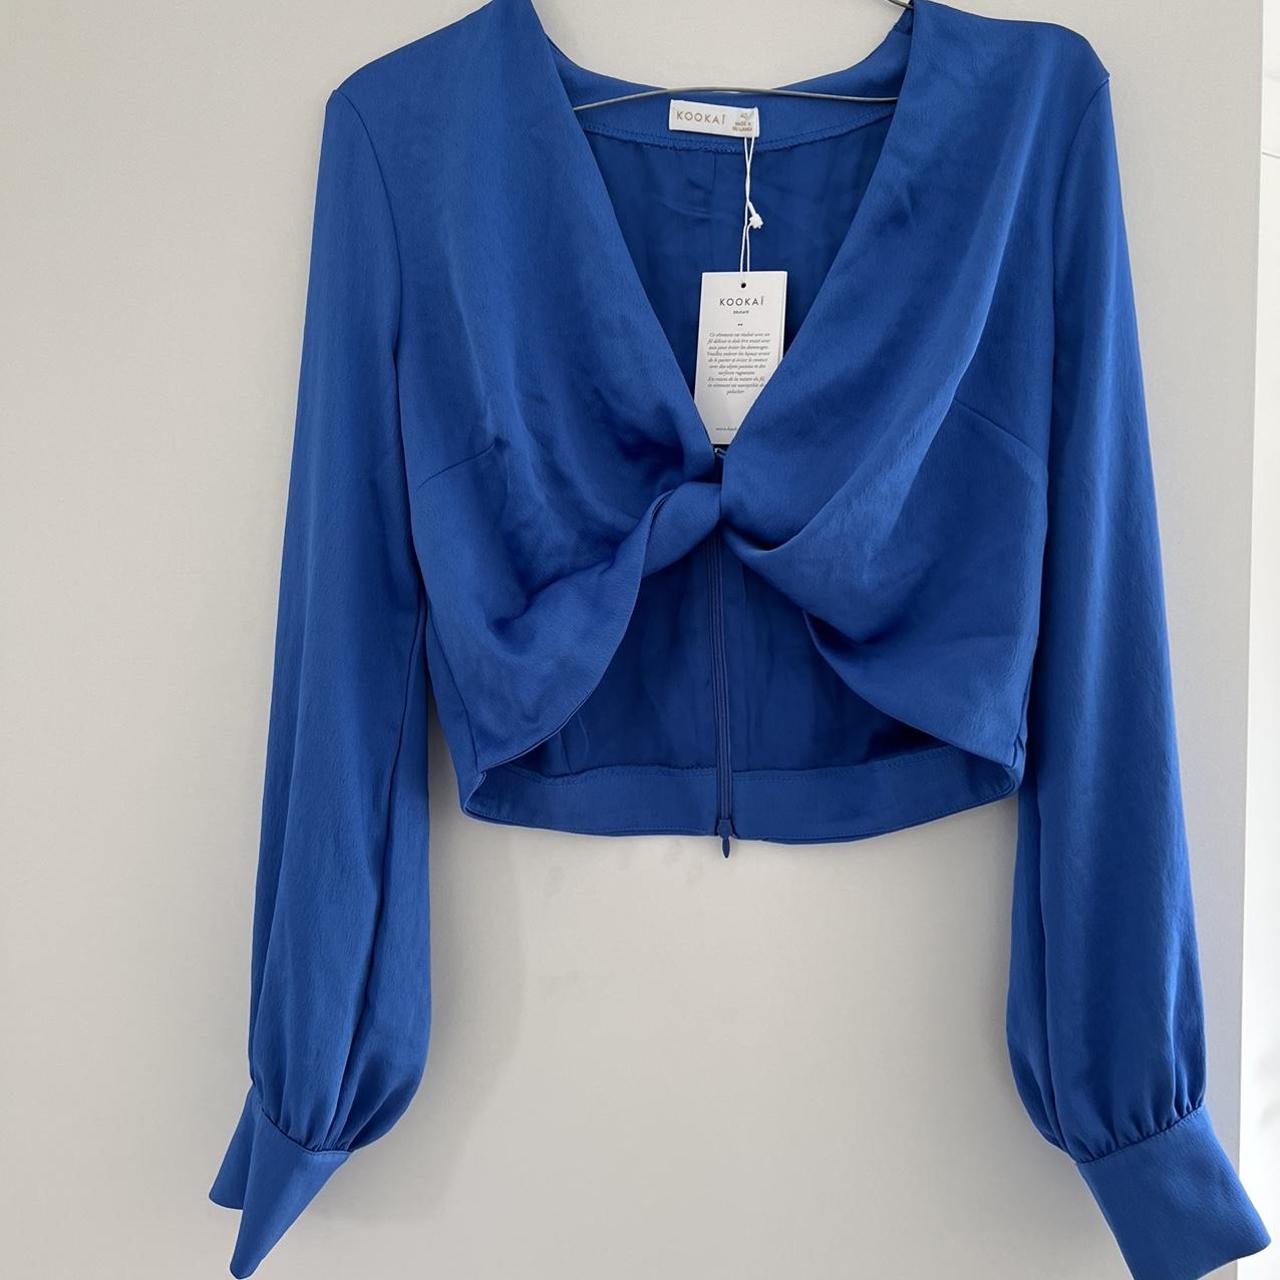 Kookai Milan top & skirt set in sapphire blue 💙 Can... - Depop